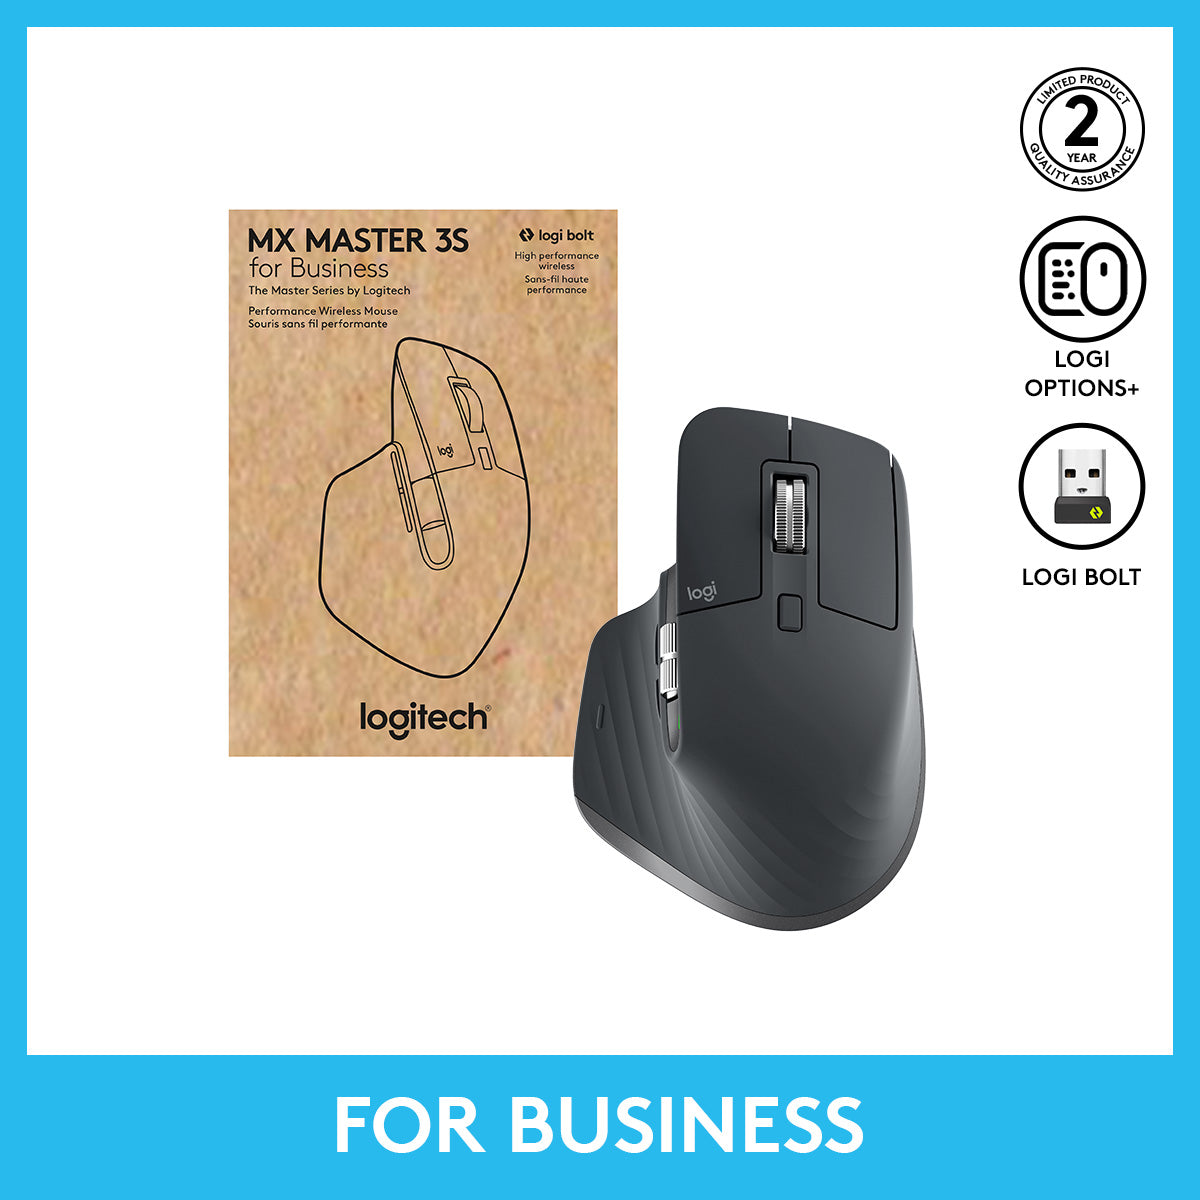 MX MASTER 3S for Business 高階靜音智能滑鼠 (石墨灰)